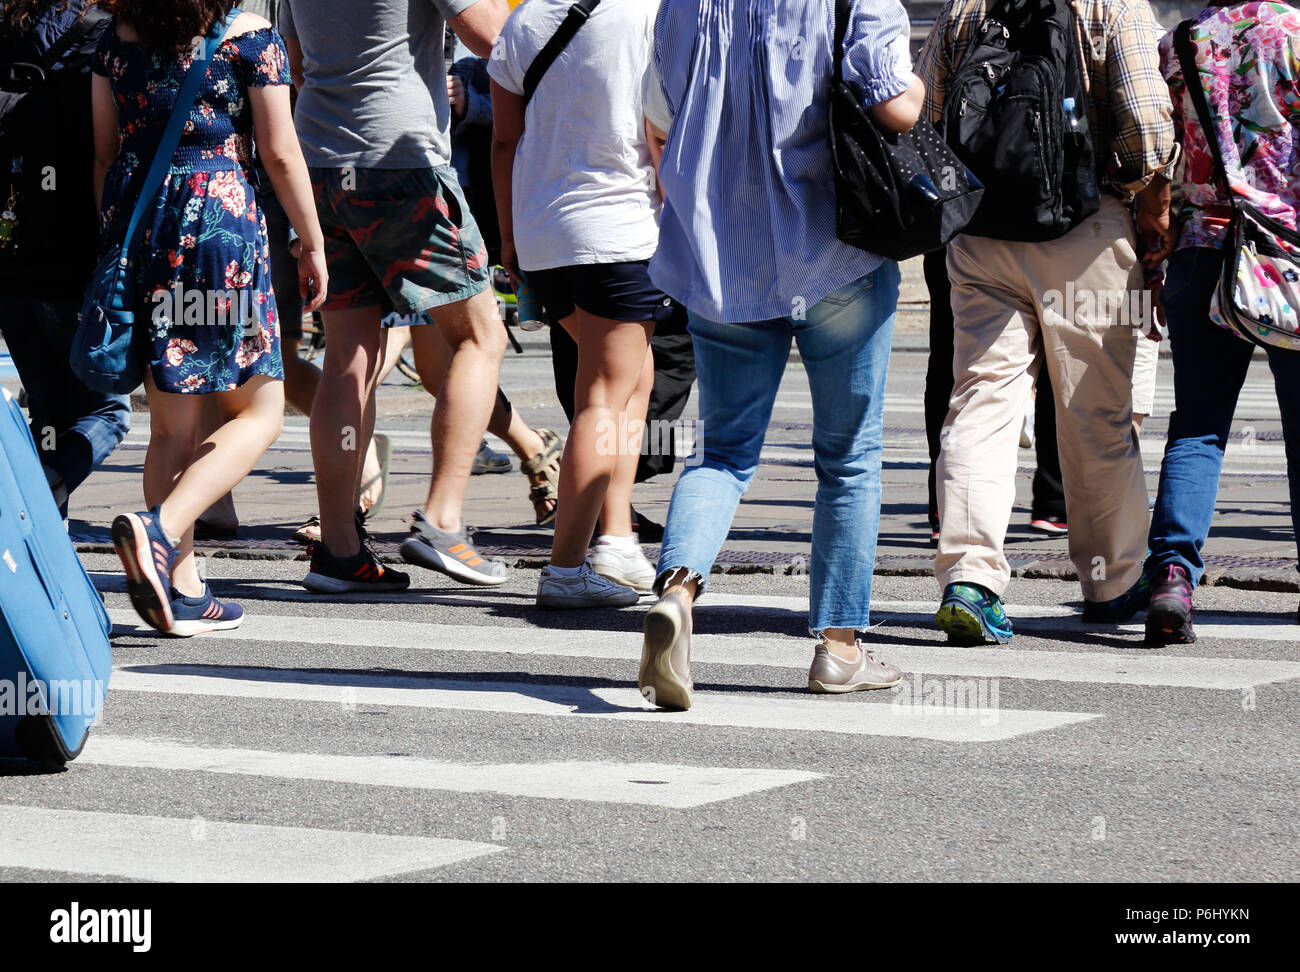 Copenhagen, Denmark - June 27, 2017: People crossing a crosswalk in downtown Copenhagen. Stock Photo